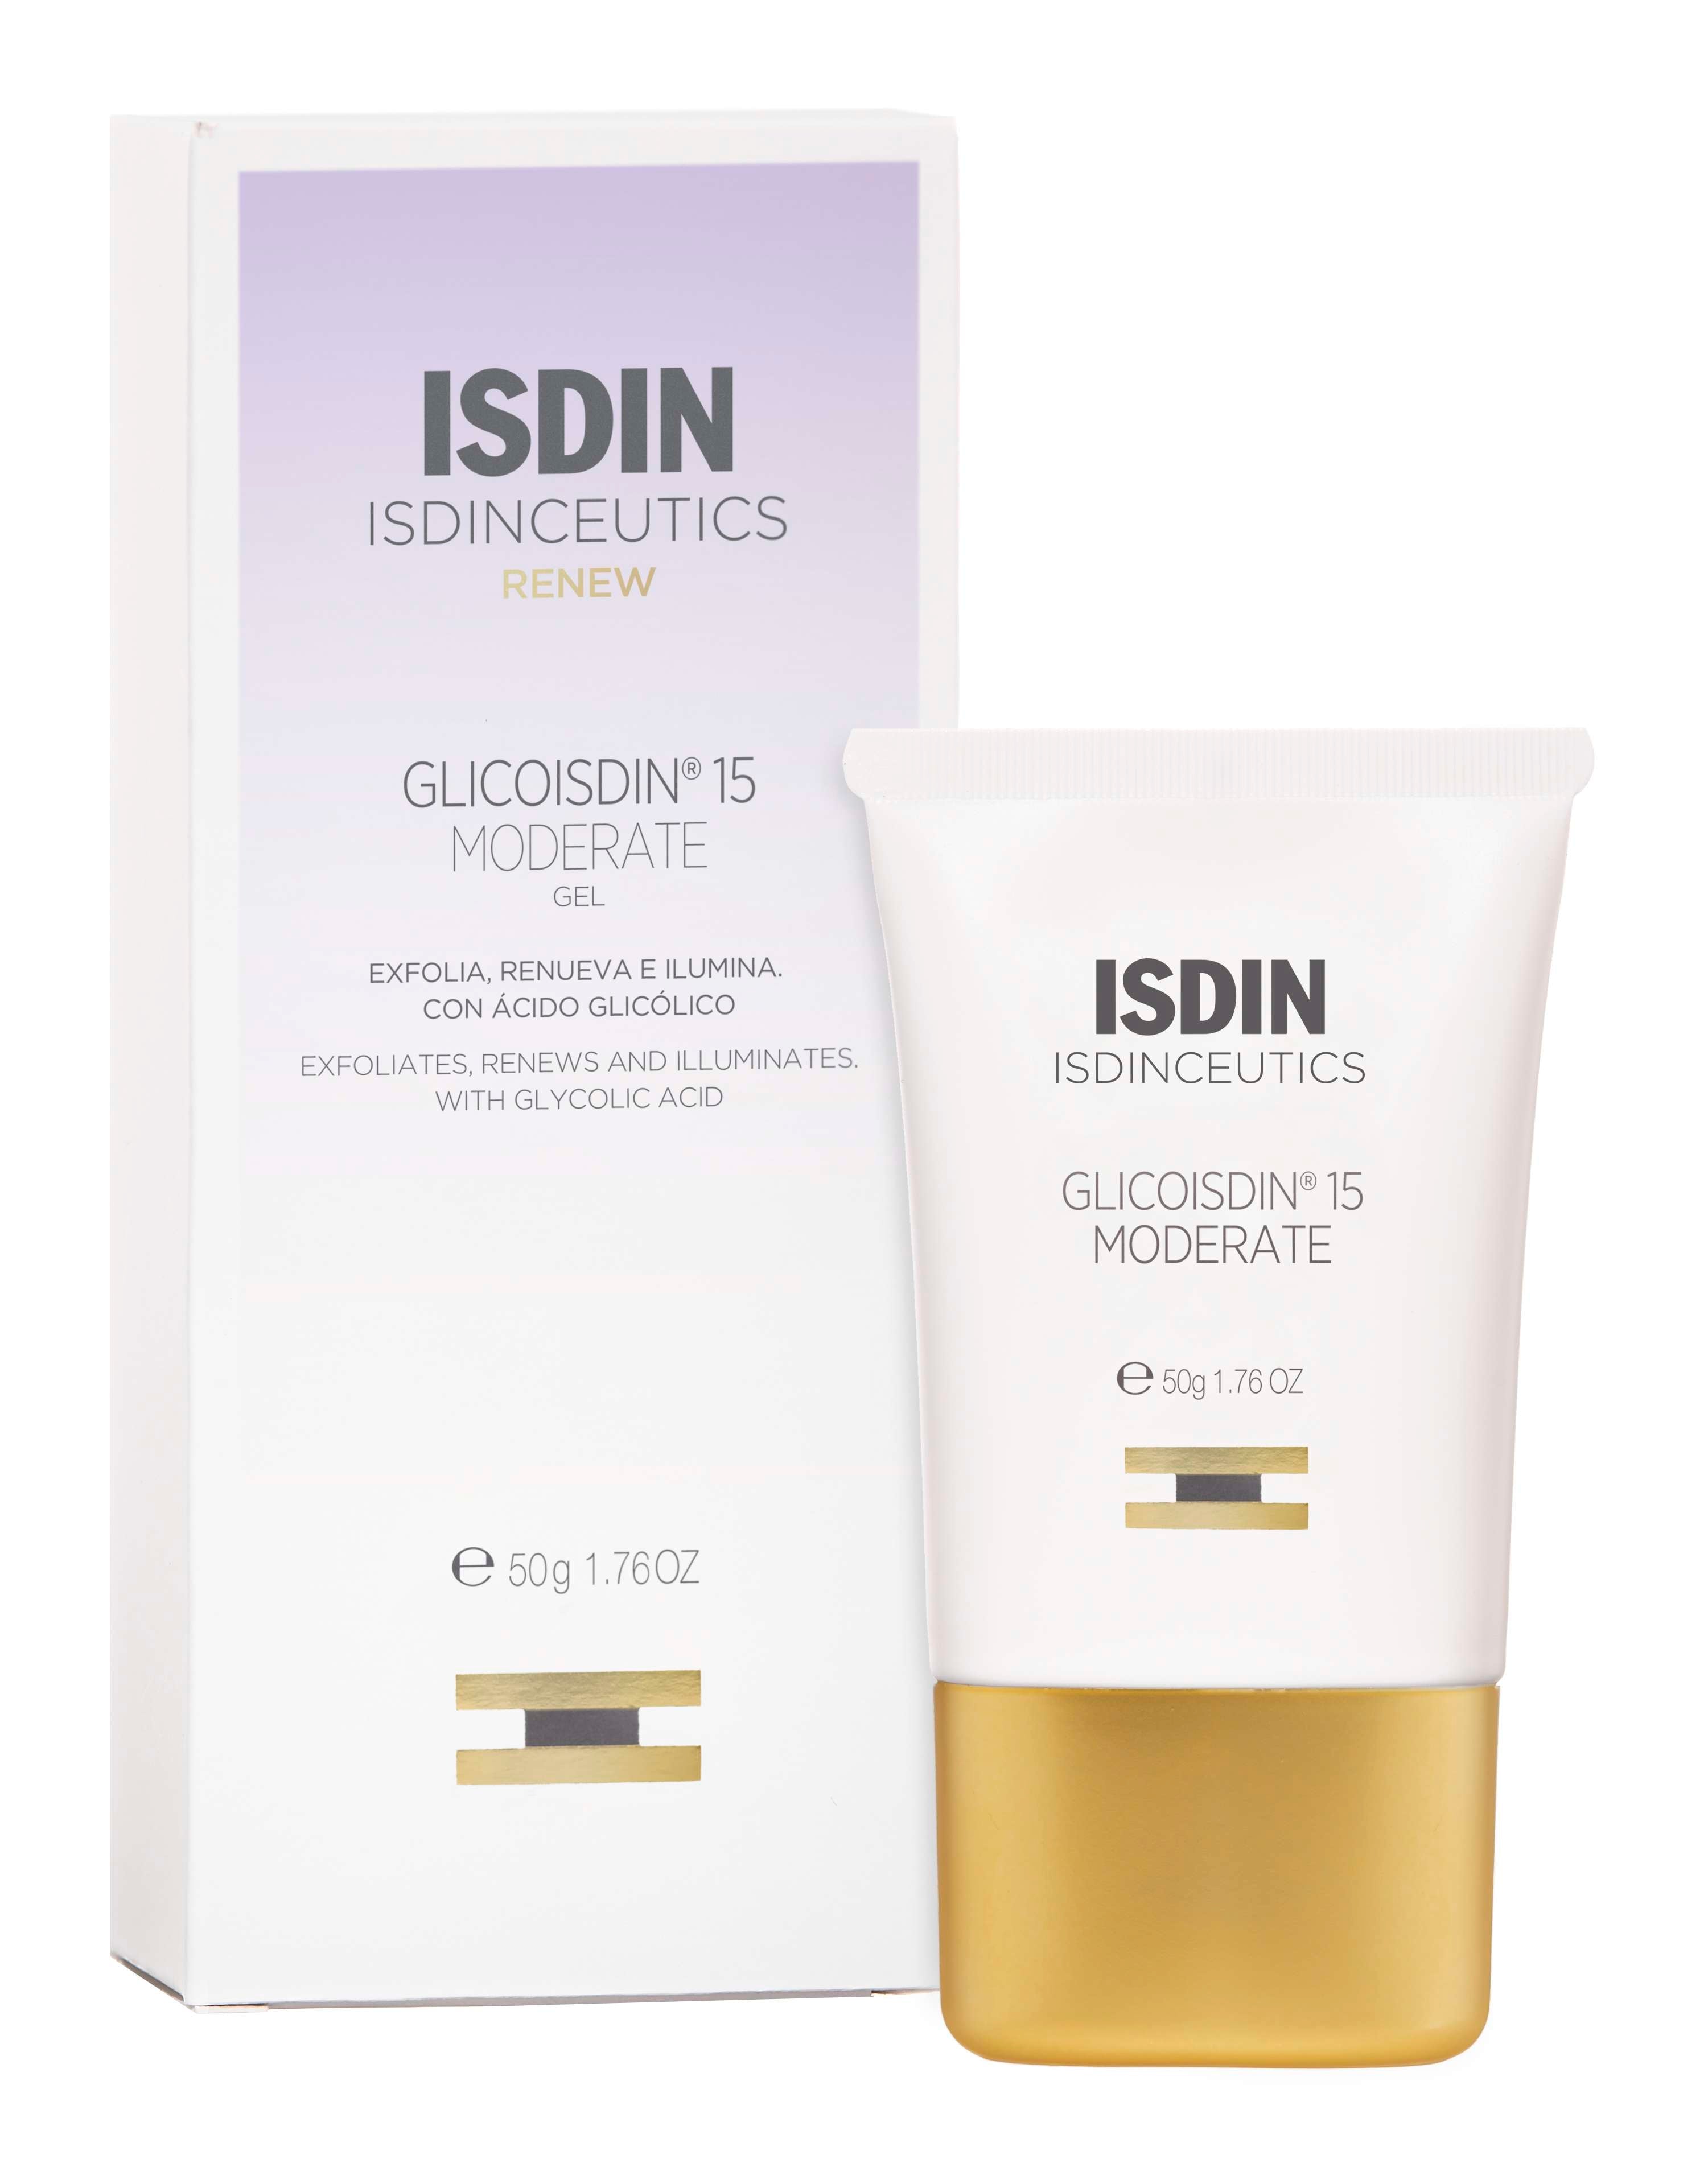 ISDIN Isdinceutics Glicoisdin 15 Moderate 50g- Efeito peeling facial com ácido glicólico